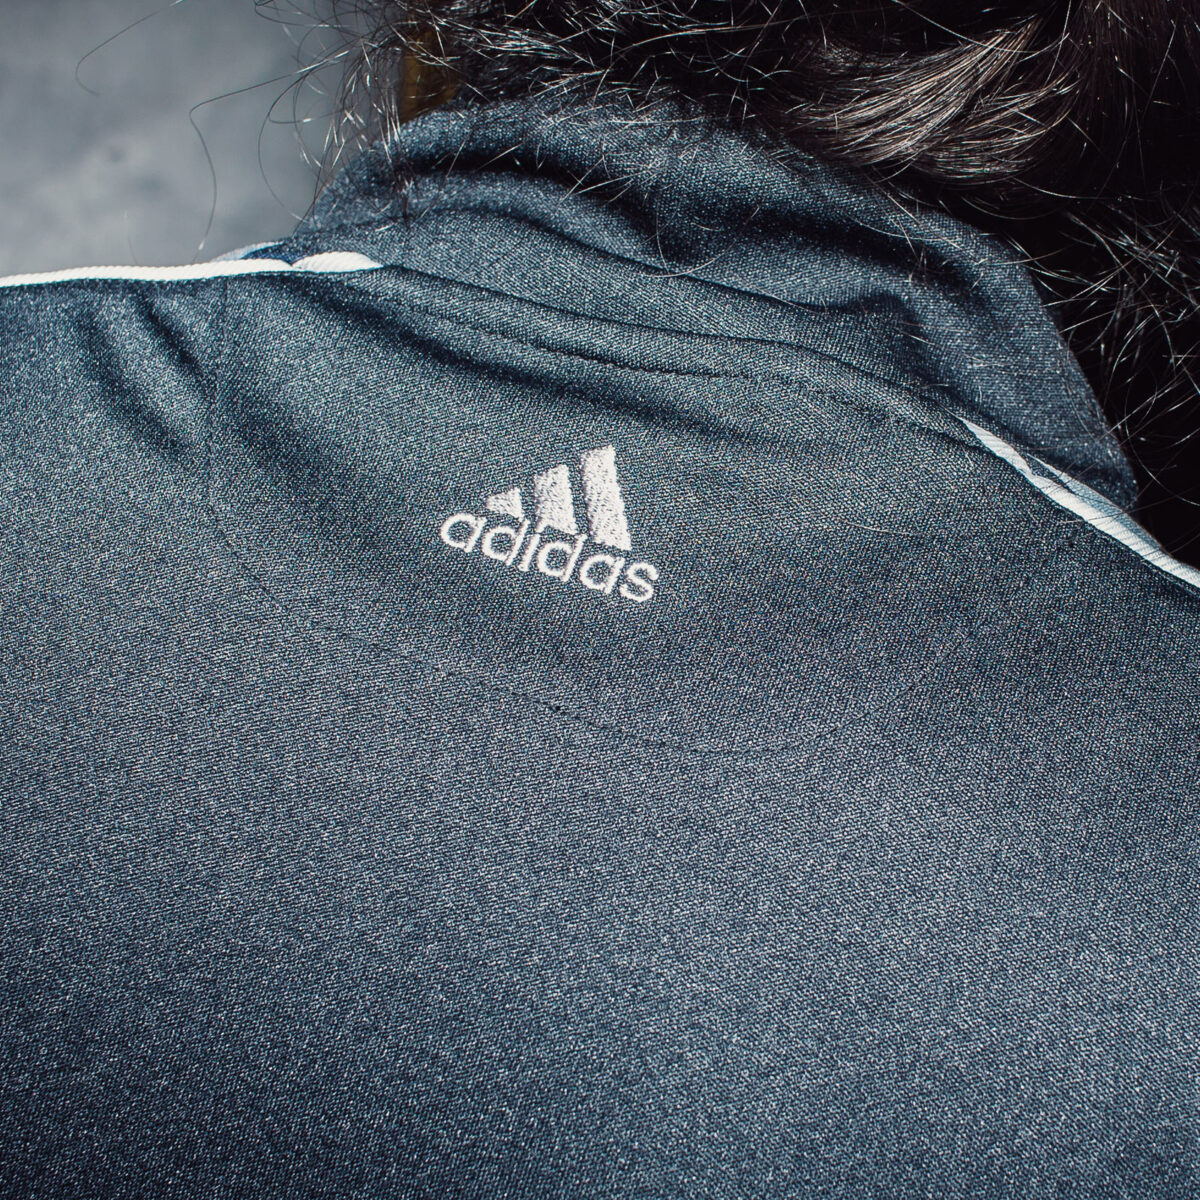 Adidas San Antonio Spurs Sweatshirt buy